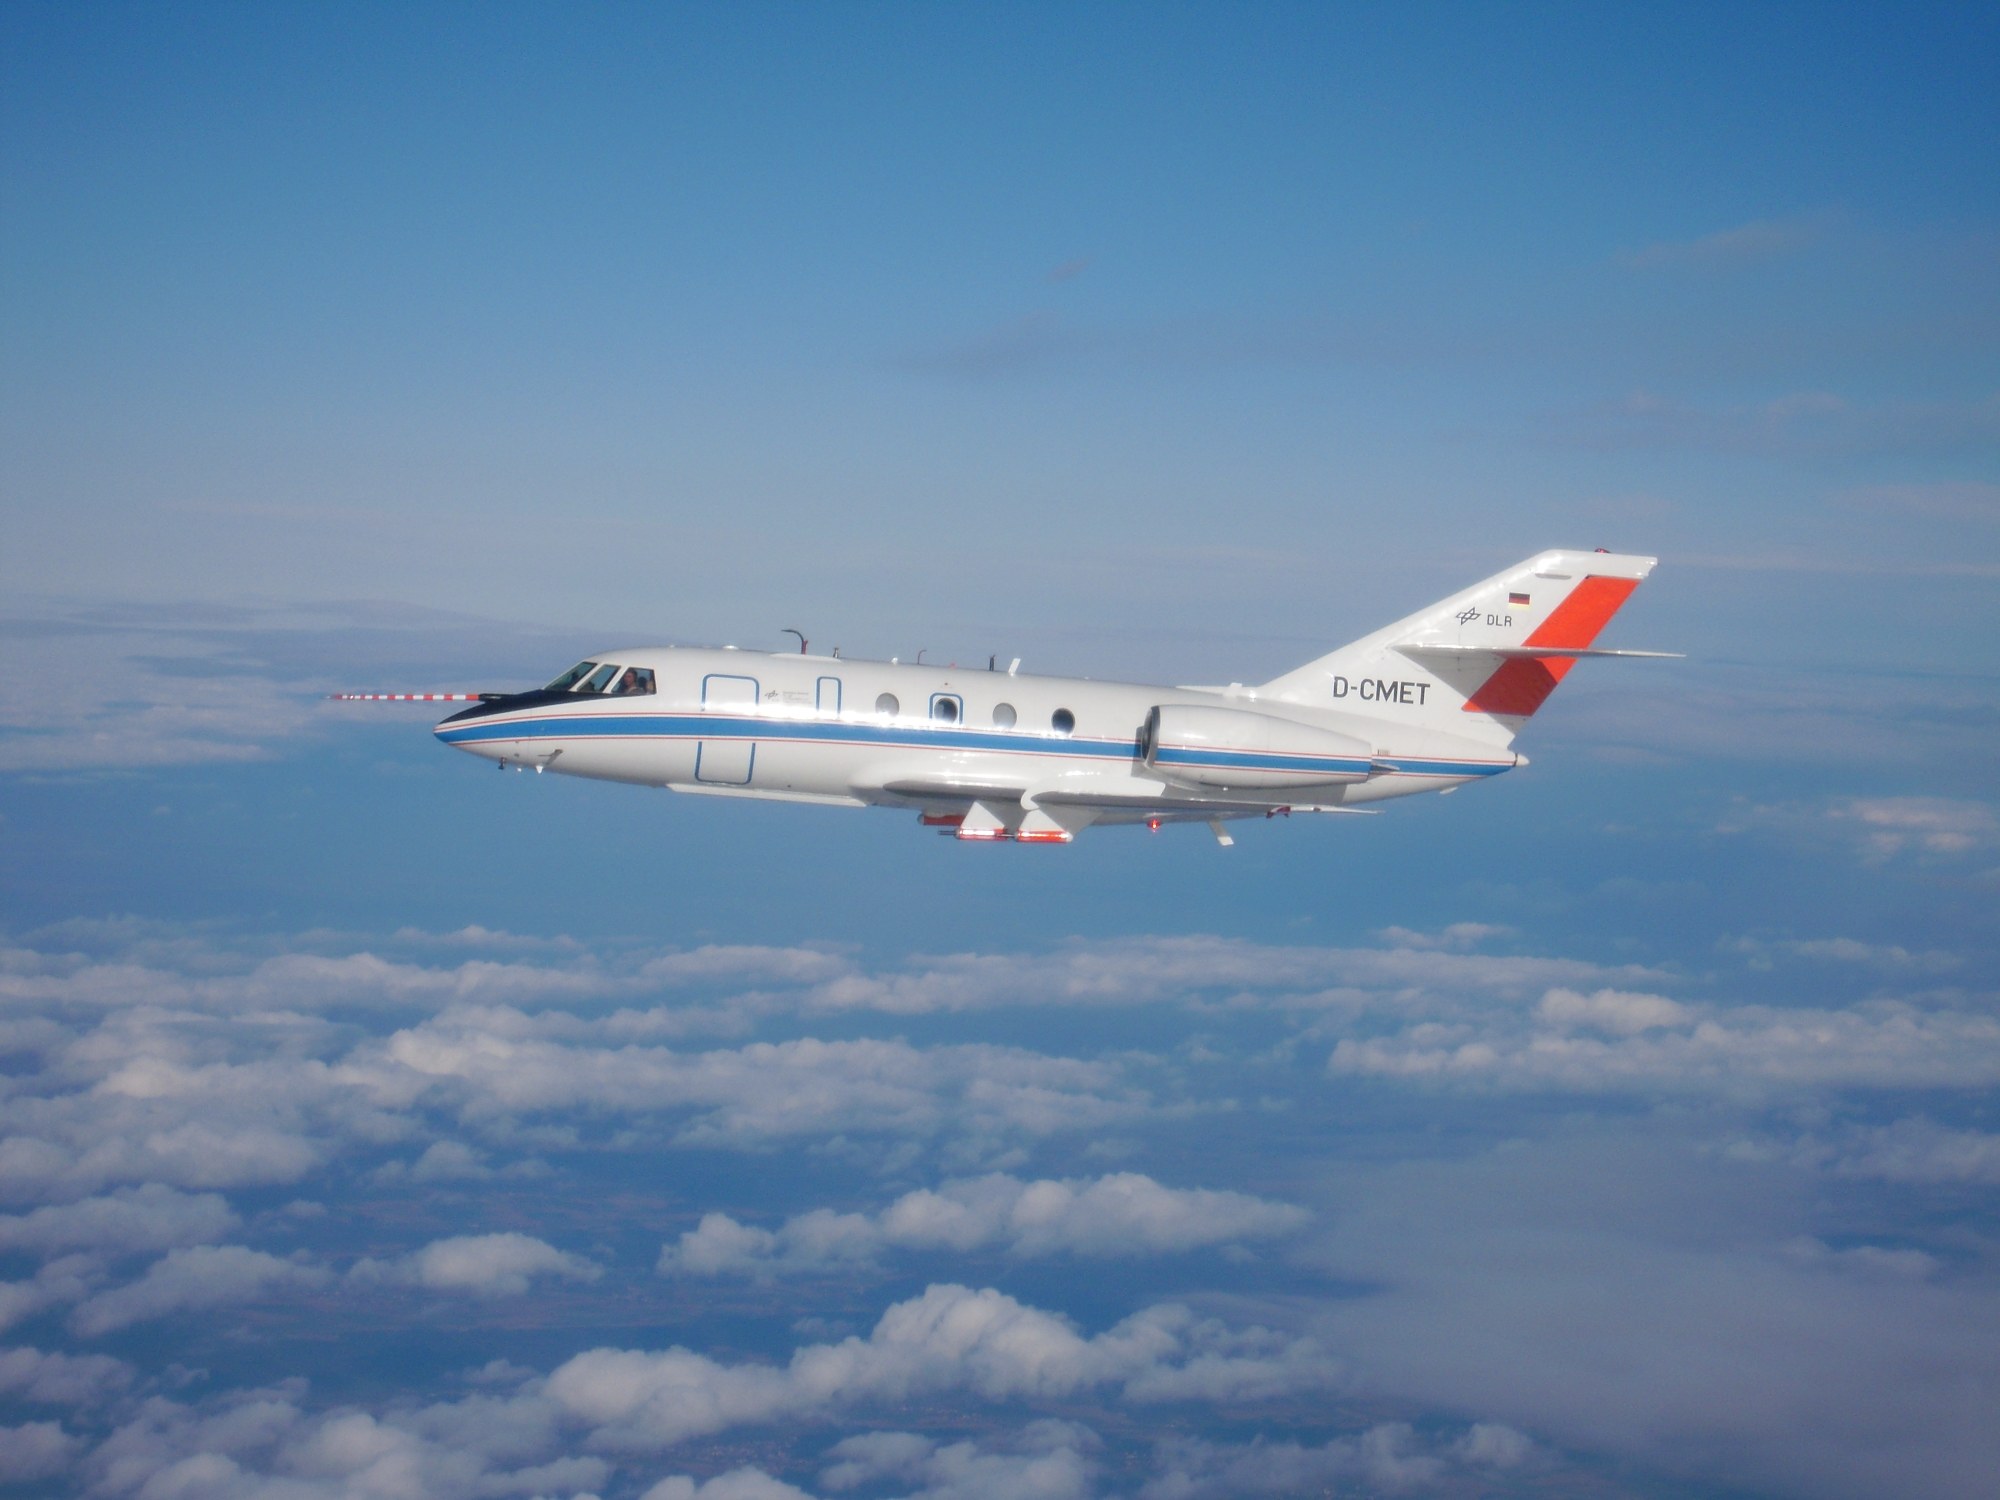 DLR Falcon research aircraft